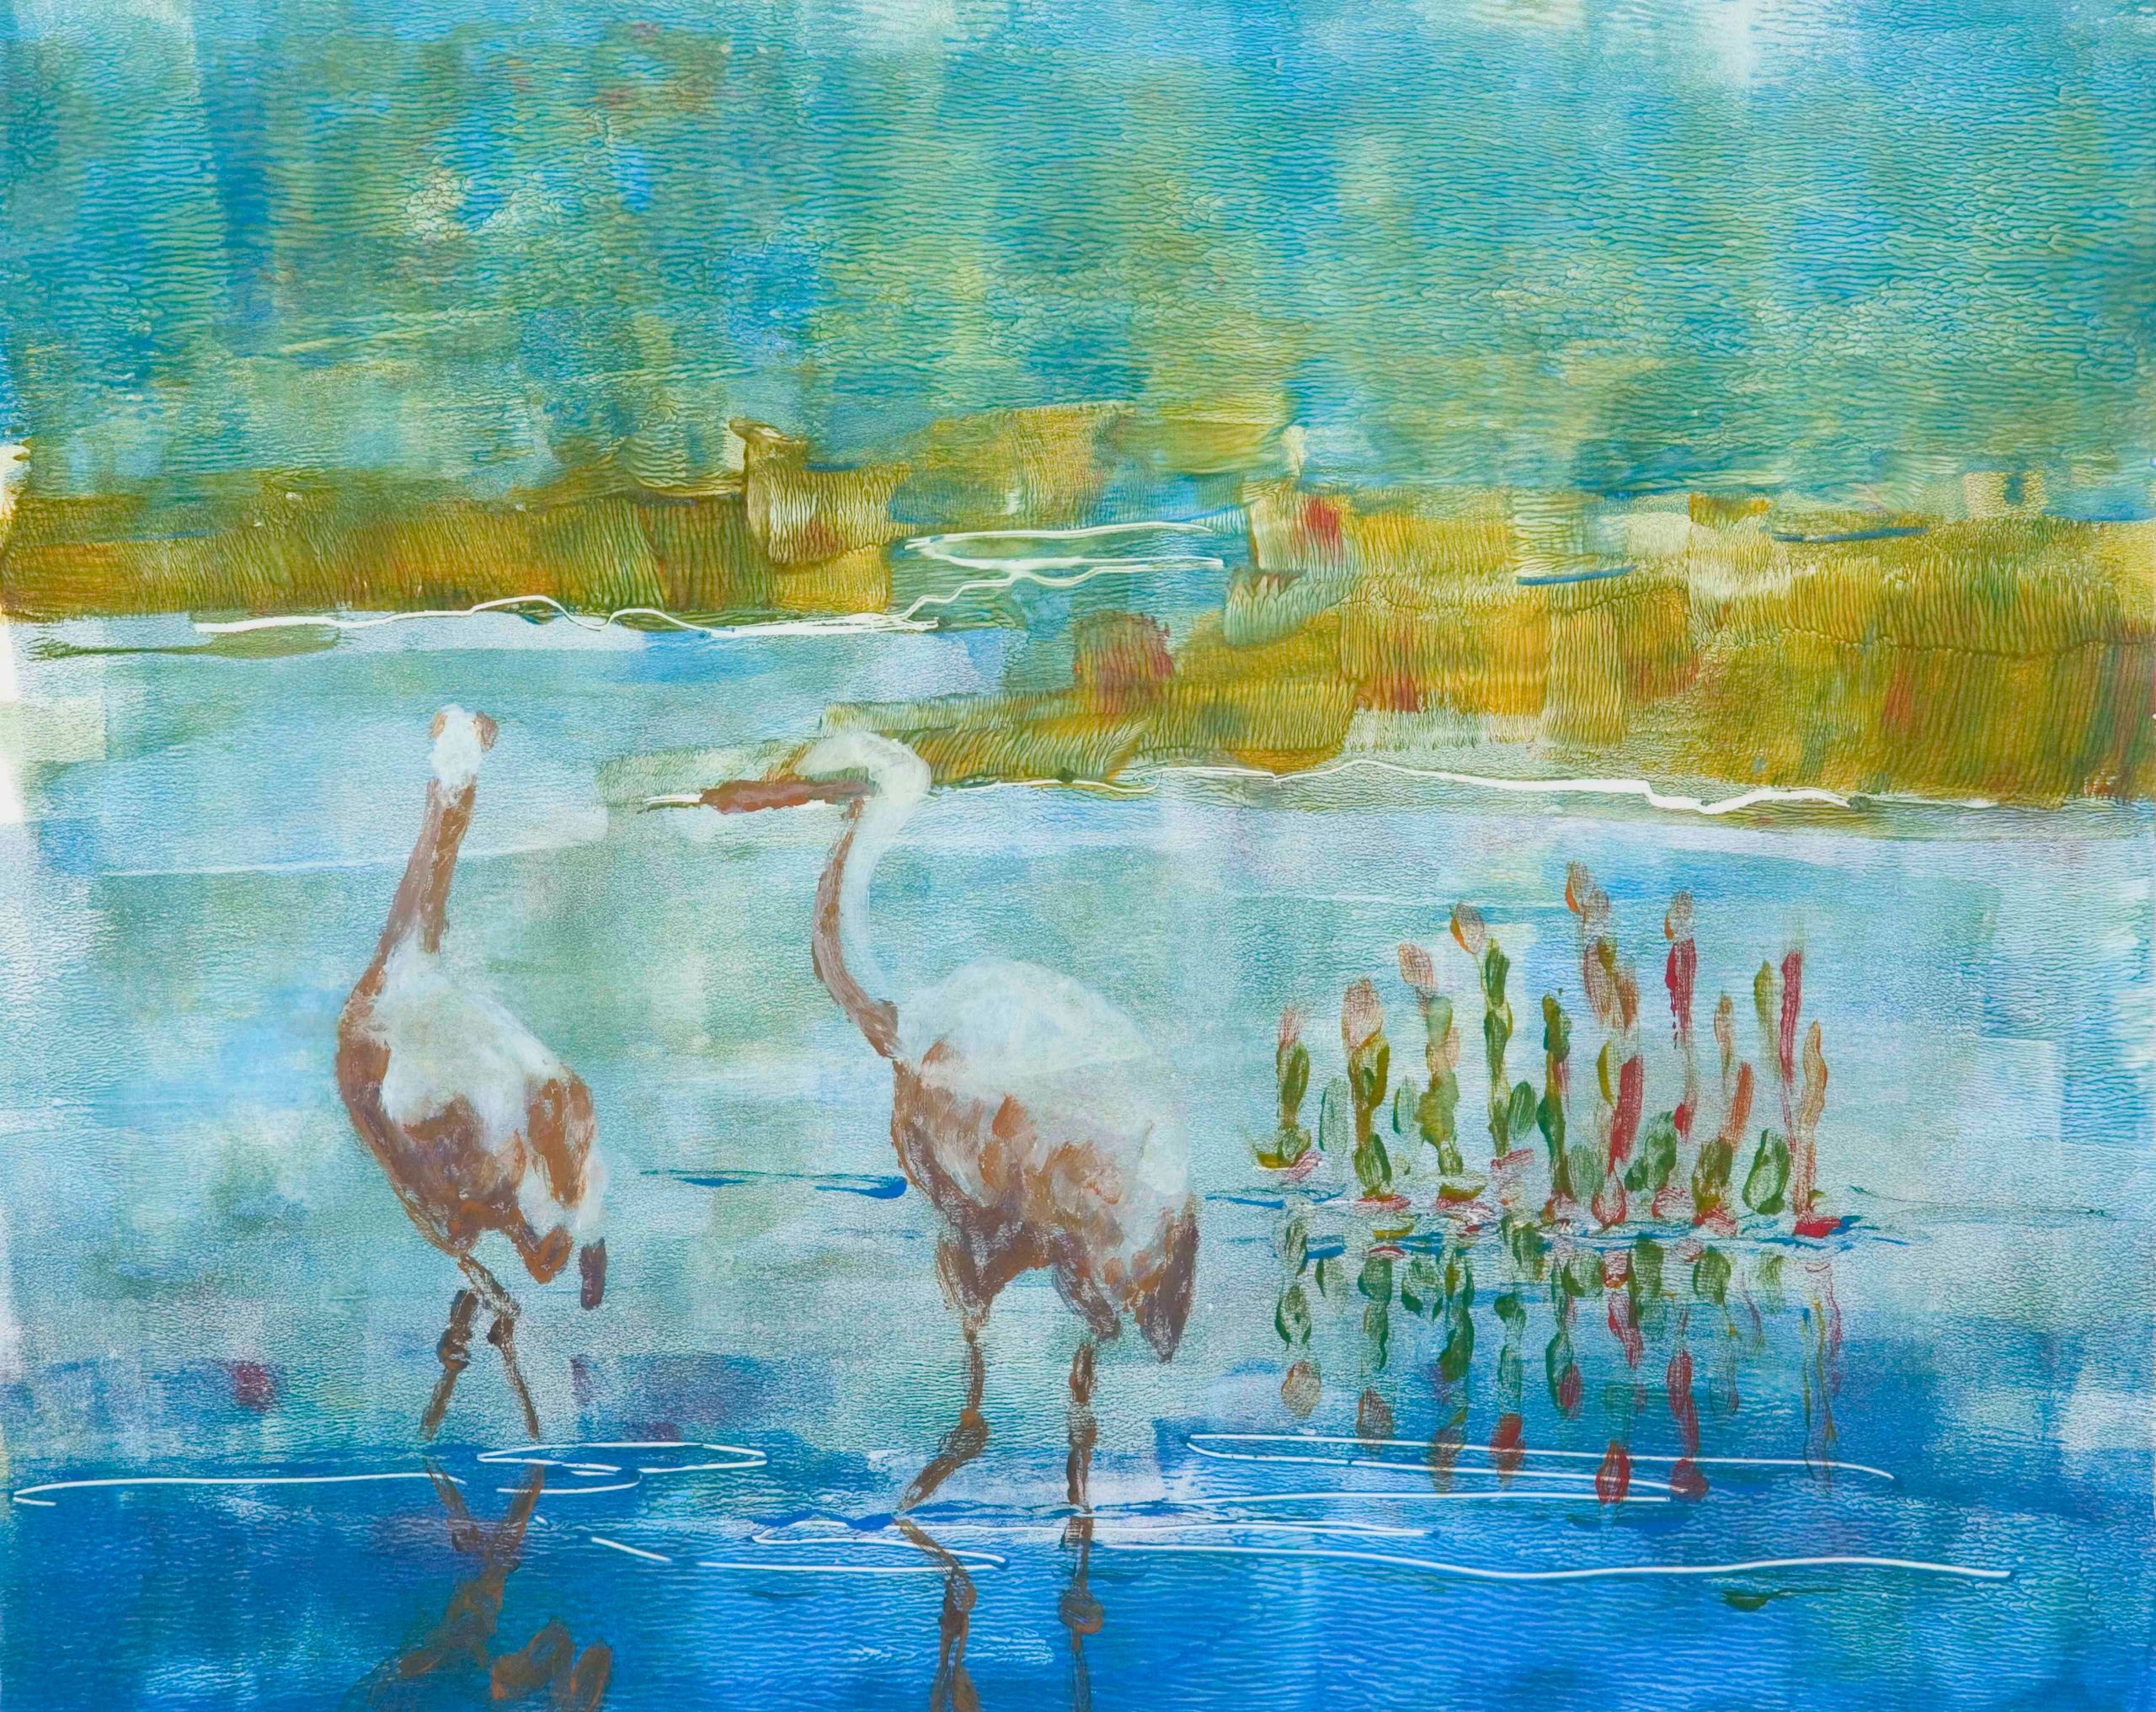 cranes wading in water. Monotype